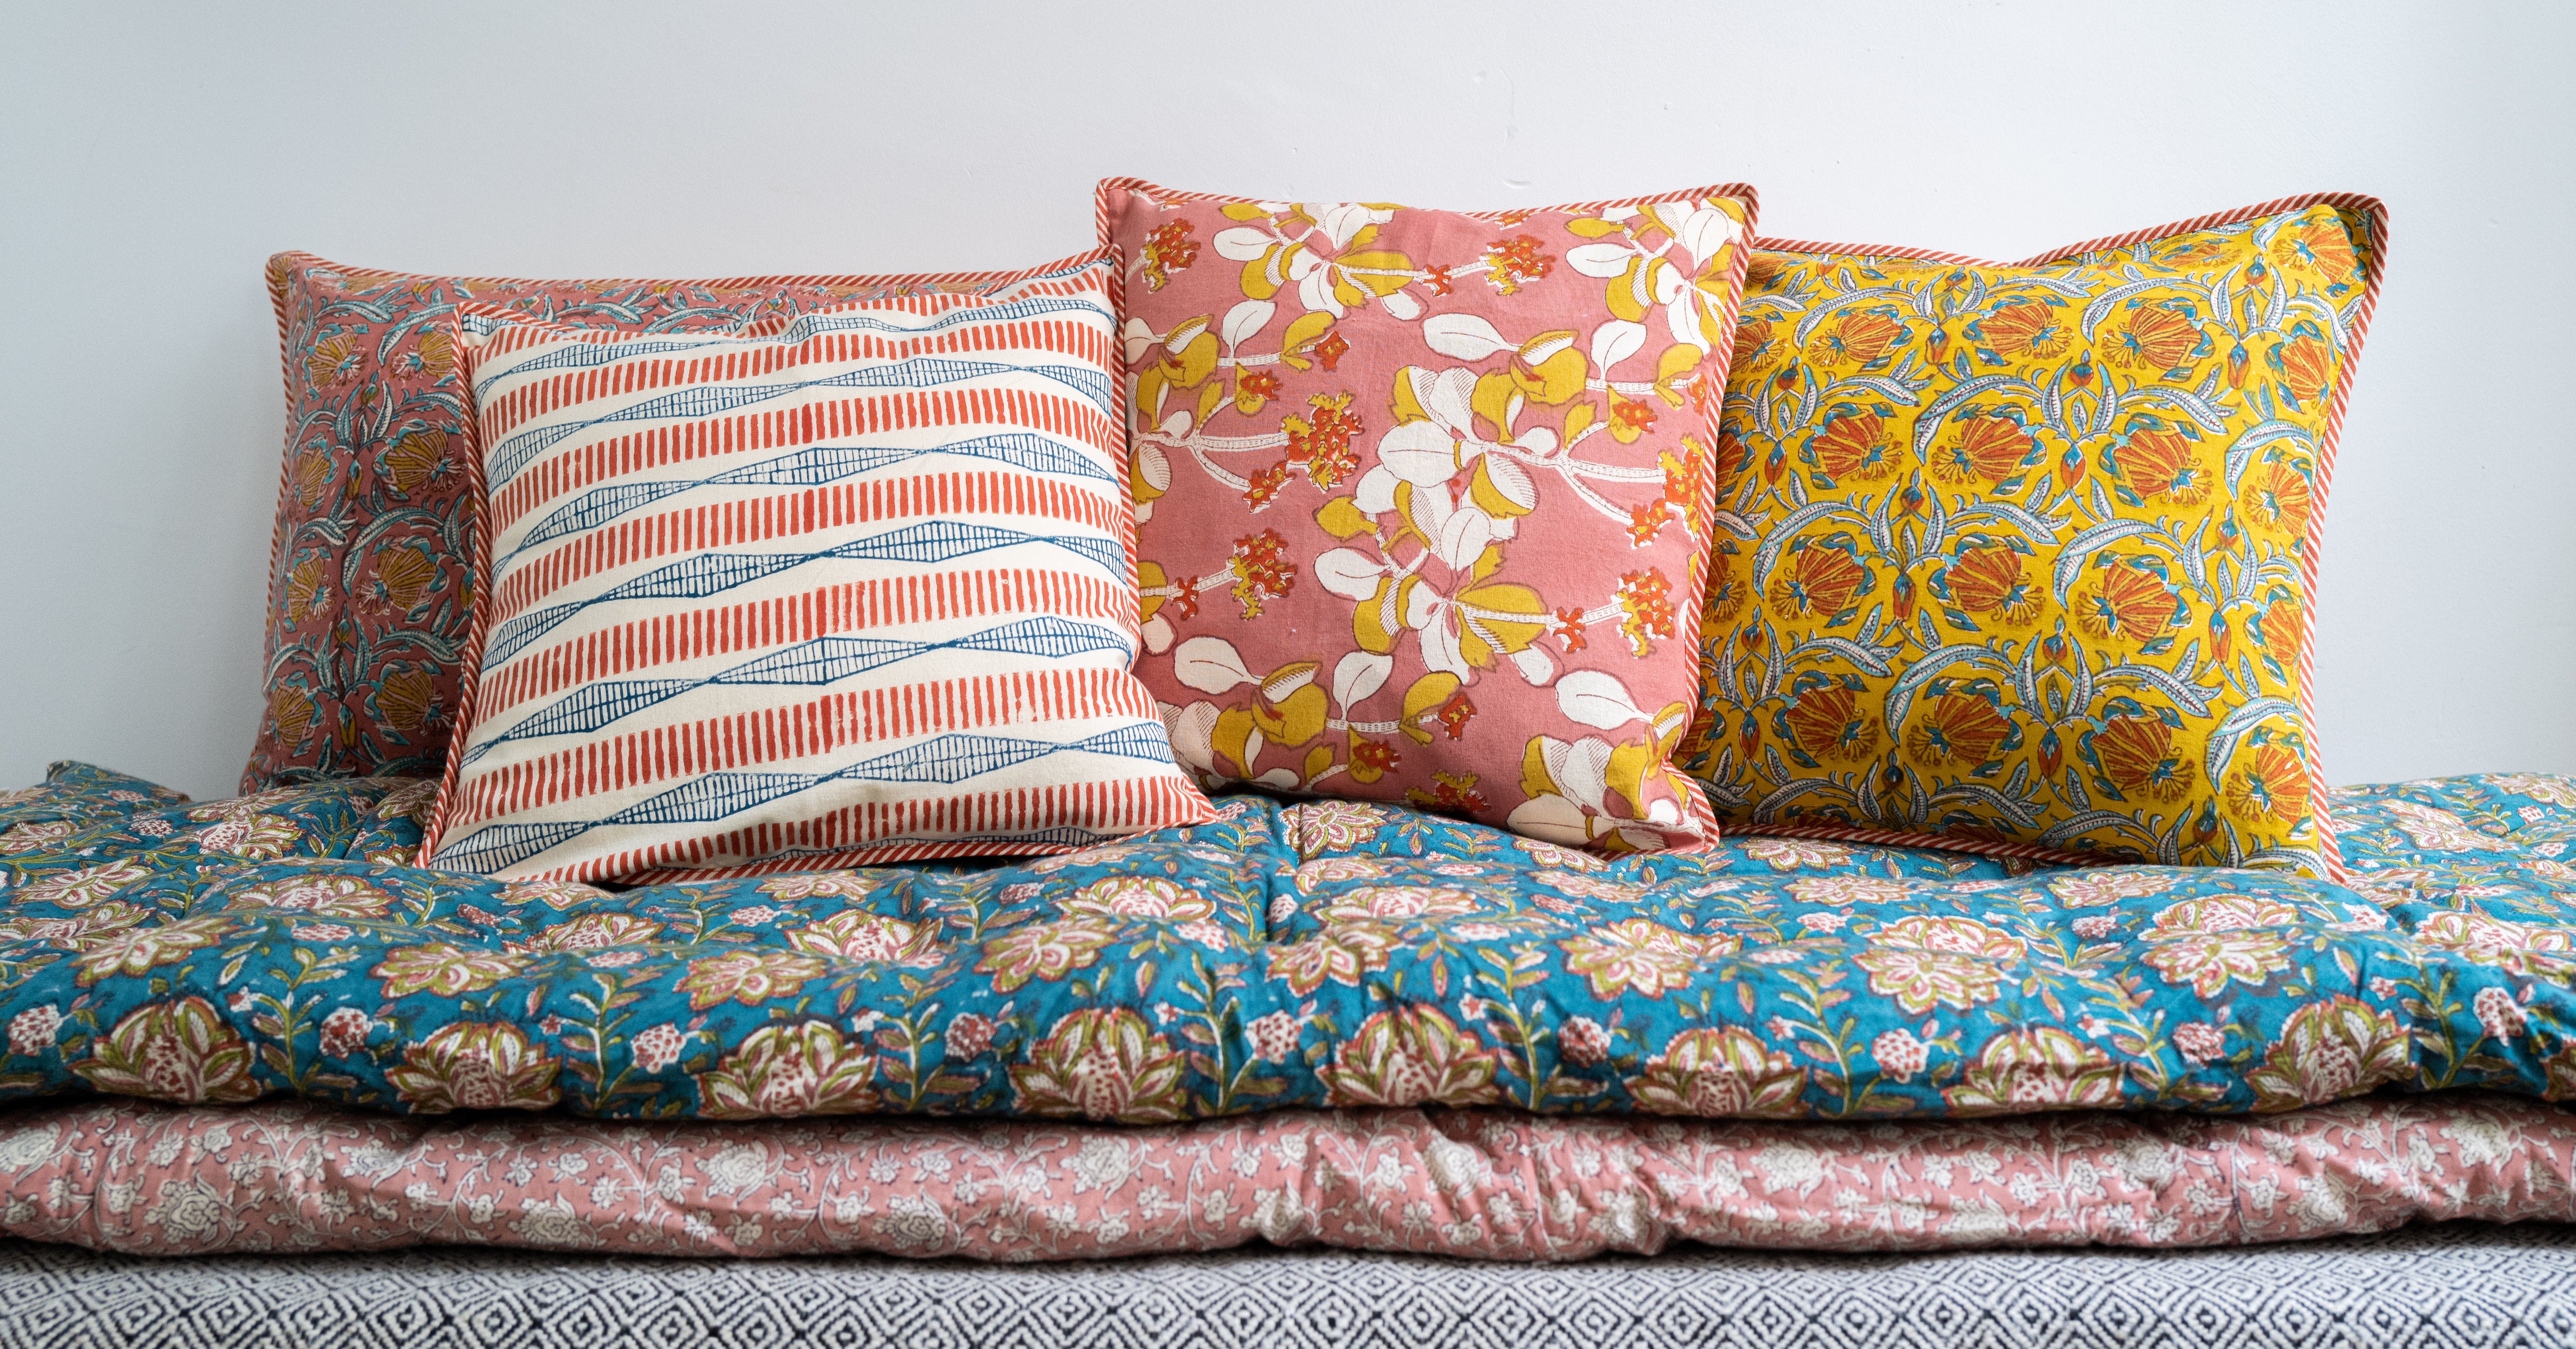 Blockprint cushions, made by Jamini, Paris, available on Storieshop.com